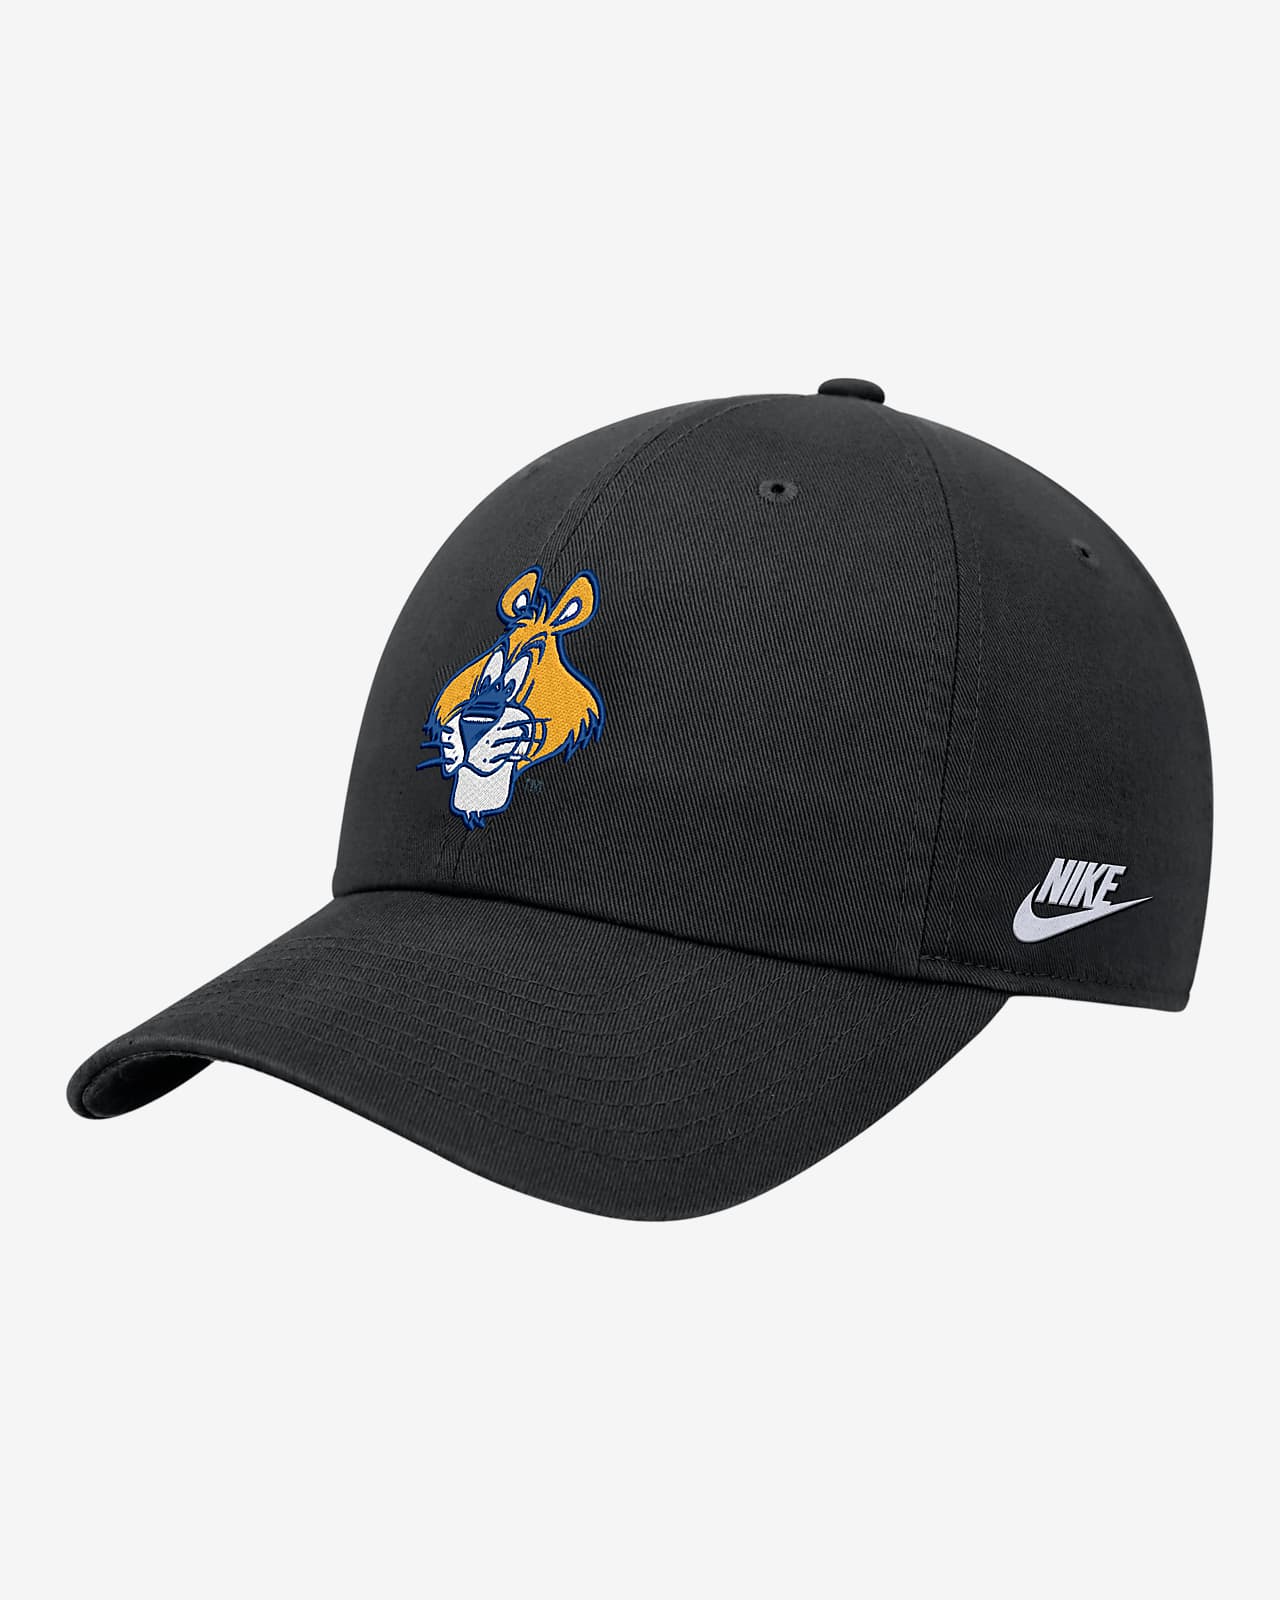 Gorra universitaria Nike Pitt